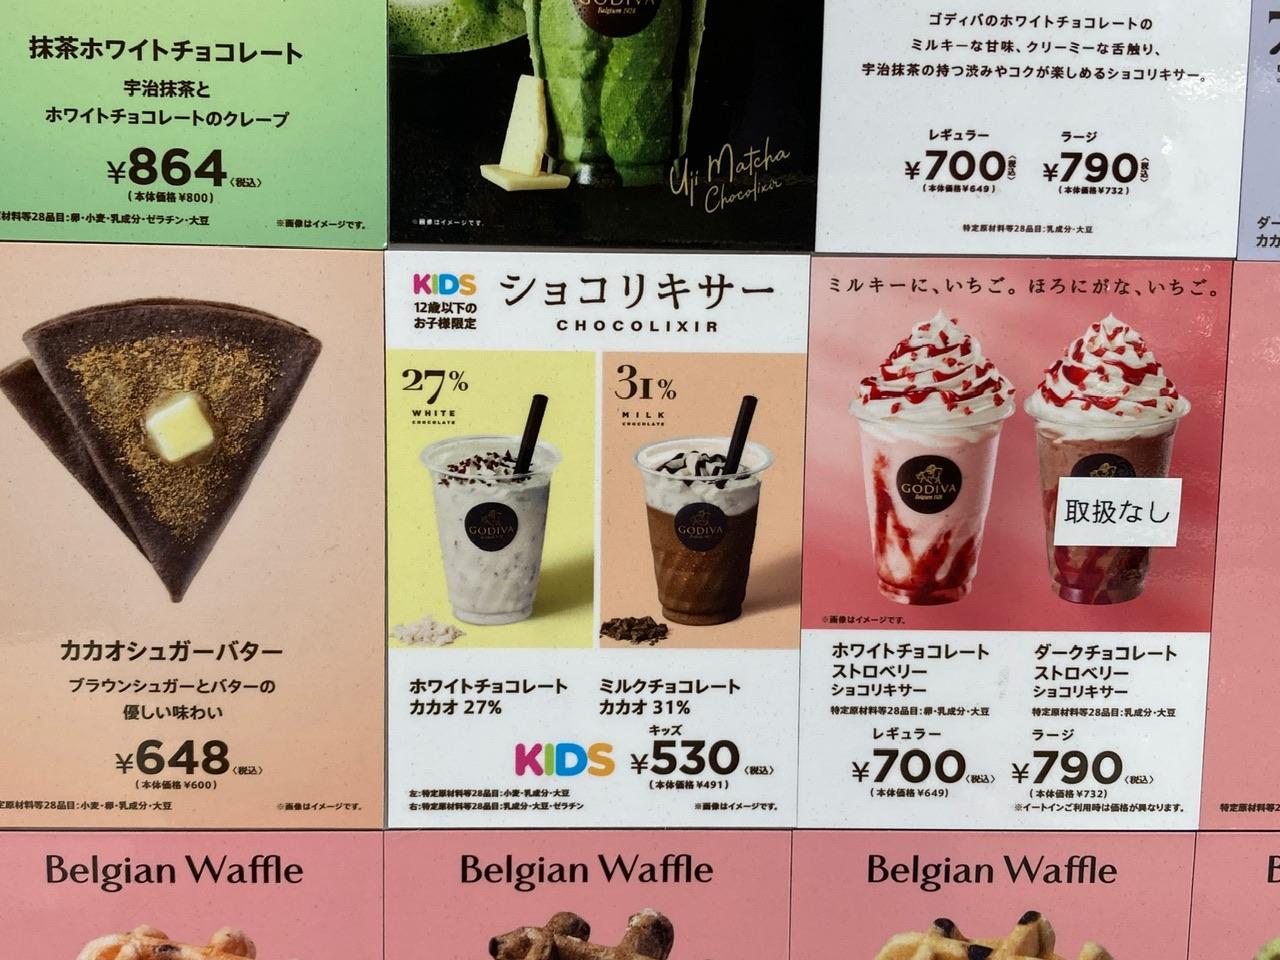 GODIVA dessert 原宿店 （ゴディバ デザート）